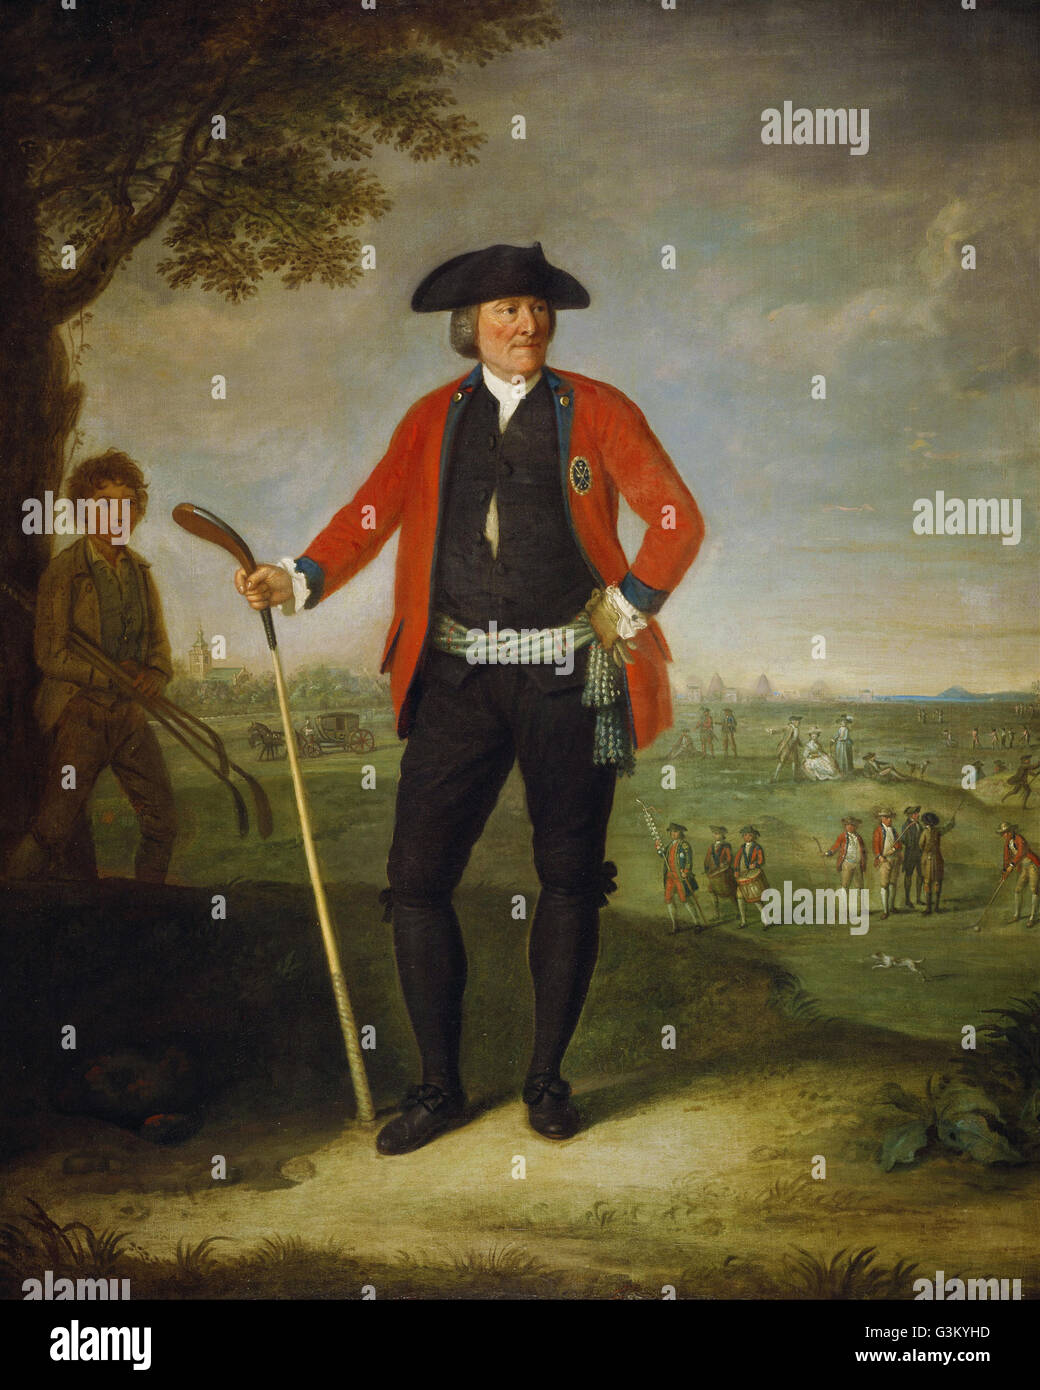 David Allan - William Inglis, c 1712 - 1792. Surgeon and Captain of the Honourable Company Stock Photo